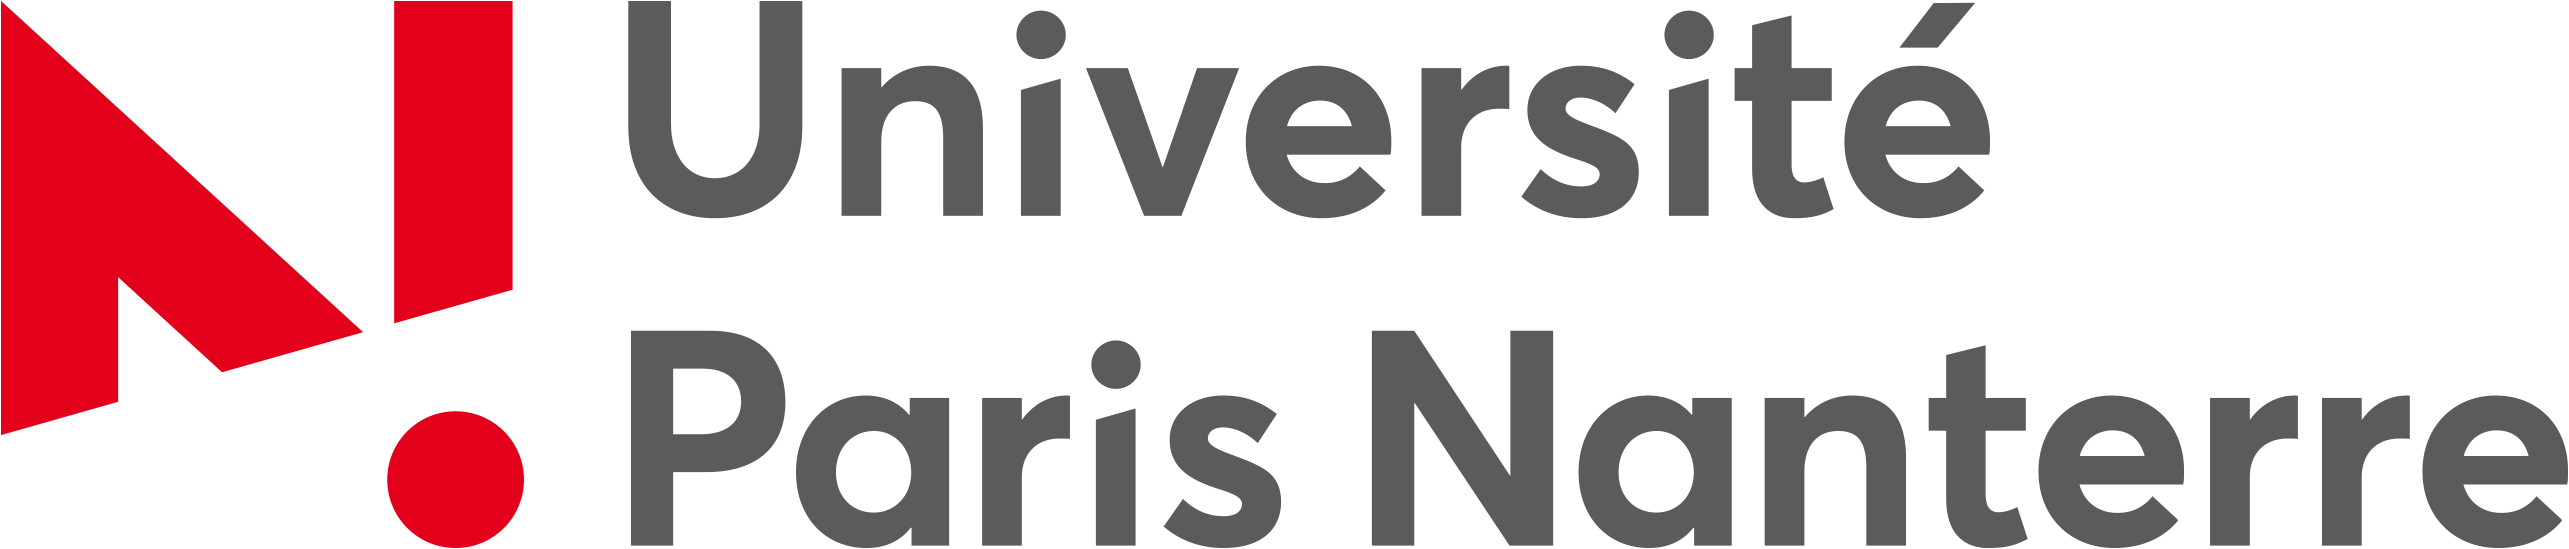 Paris Nanterre University